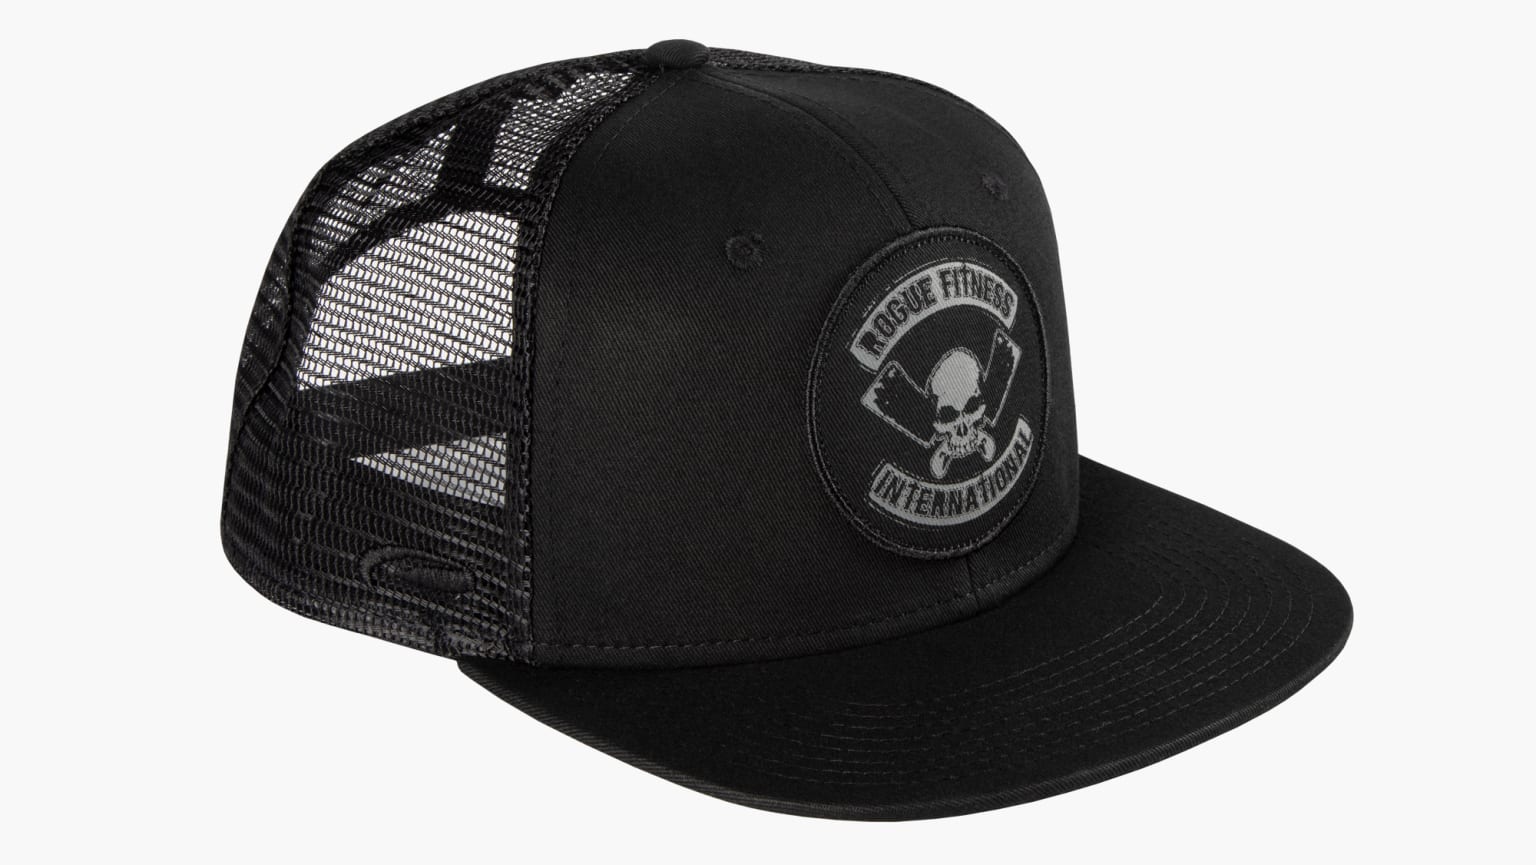 Rogue International Flat Bill Hat - Trucker Hat / Baseball Cap - Black